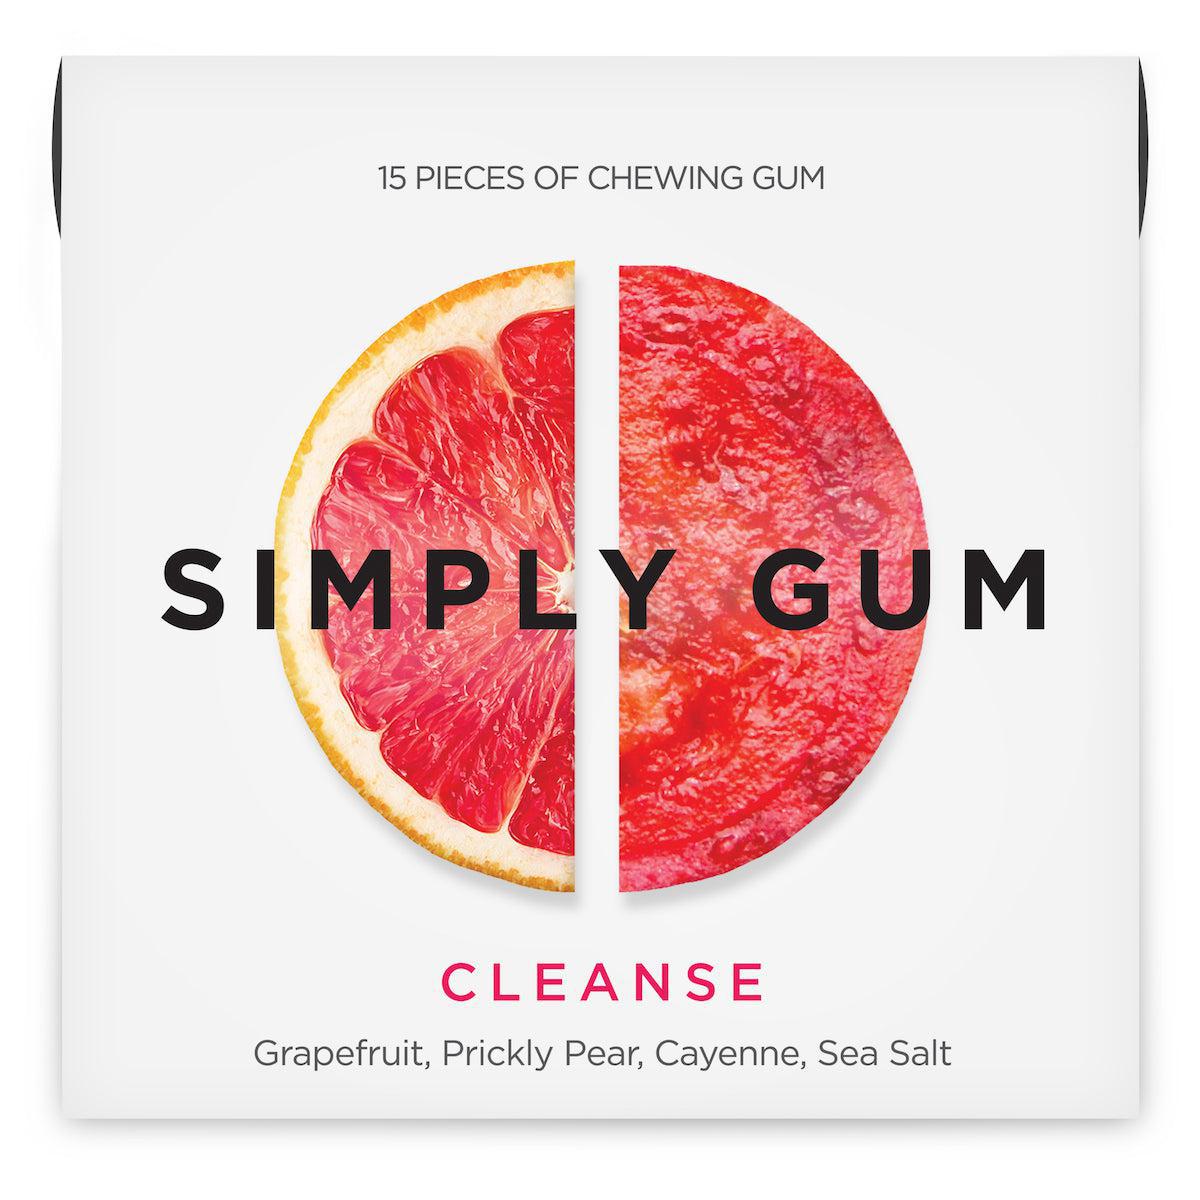 Cleanse Gum (Grapefruit, Prickly Pear, Cayenne, Sea Salt) - Simply Gum